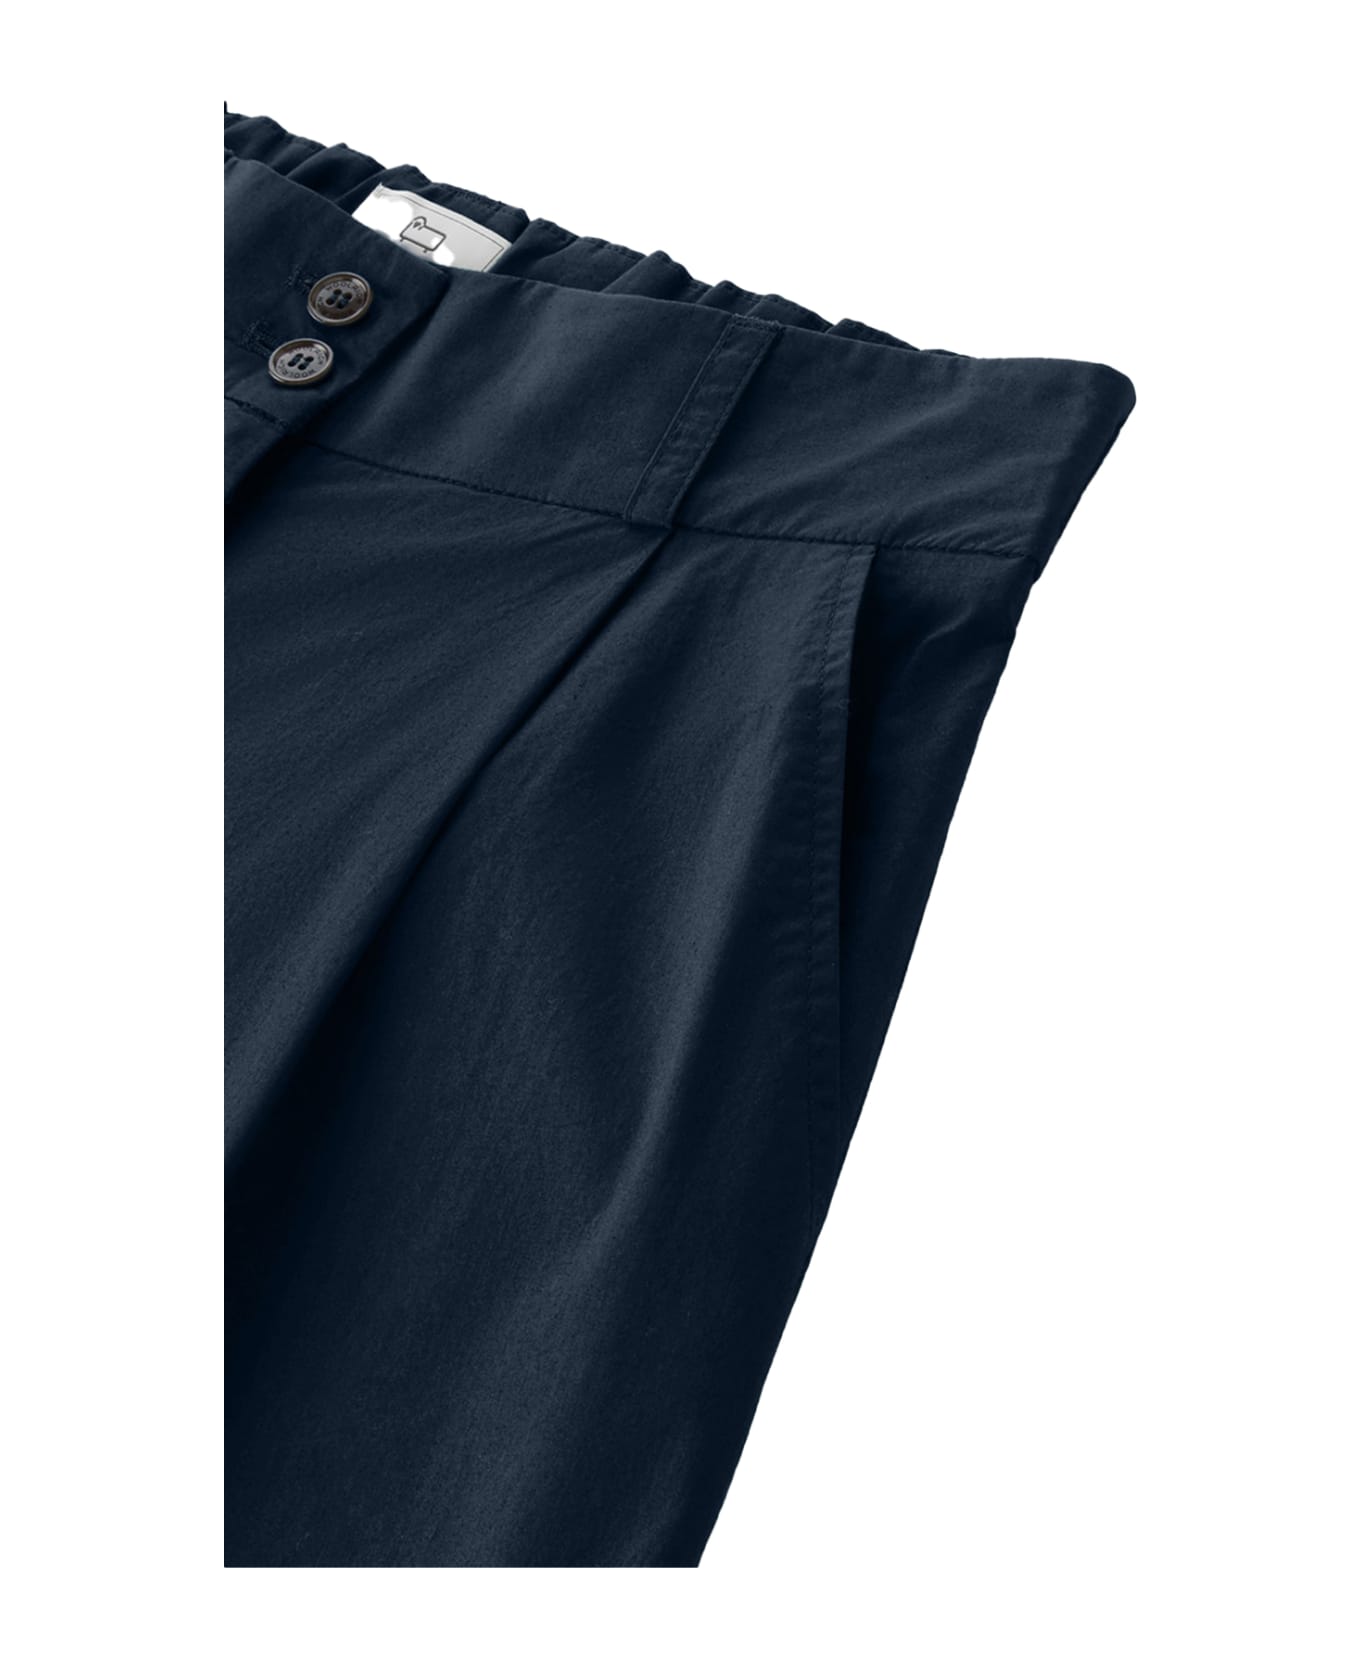 Woolrich Navy Blue Cotton Shorts - MELTON BLUE